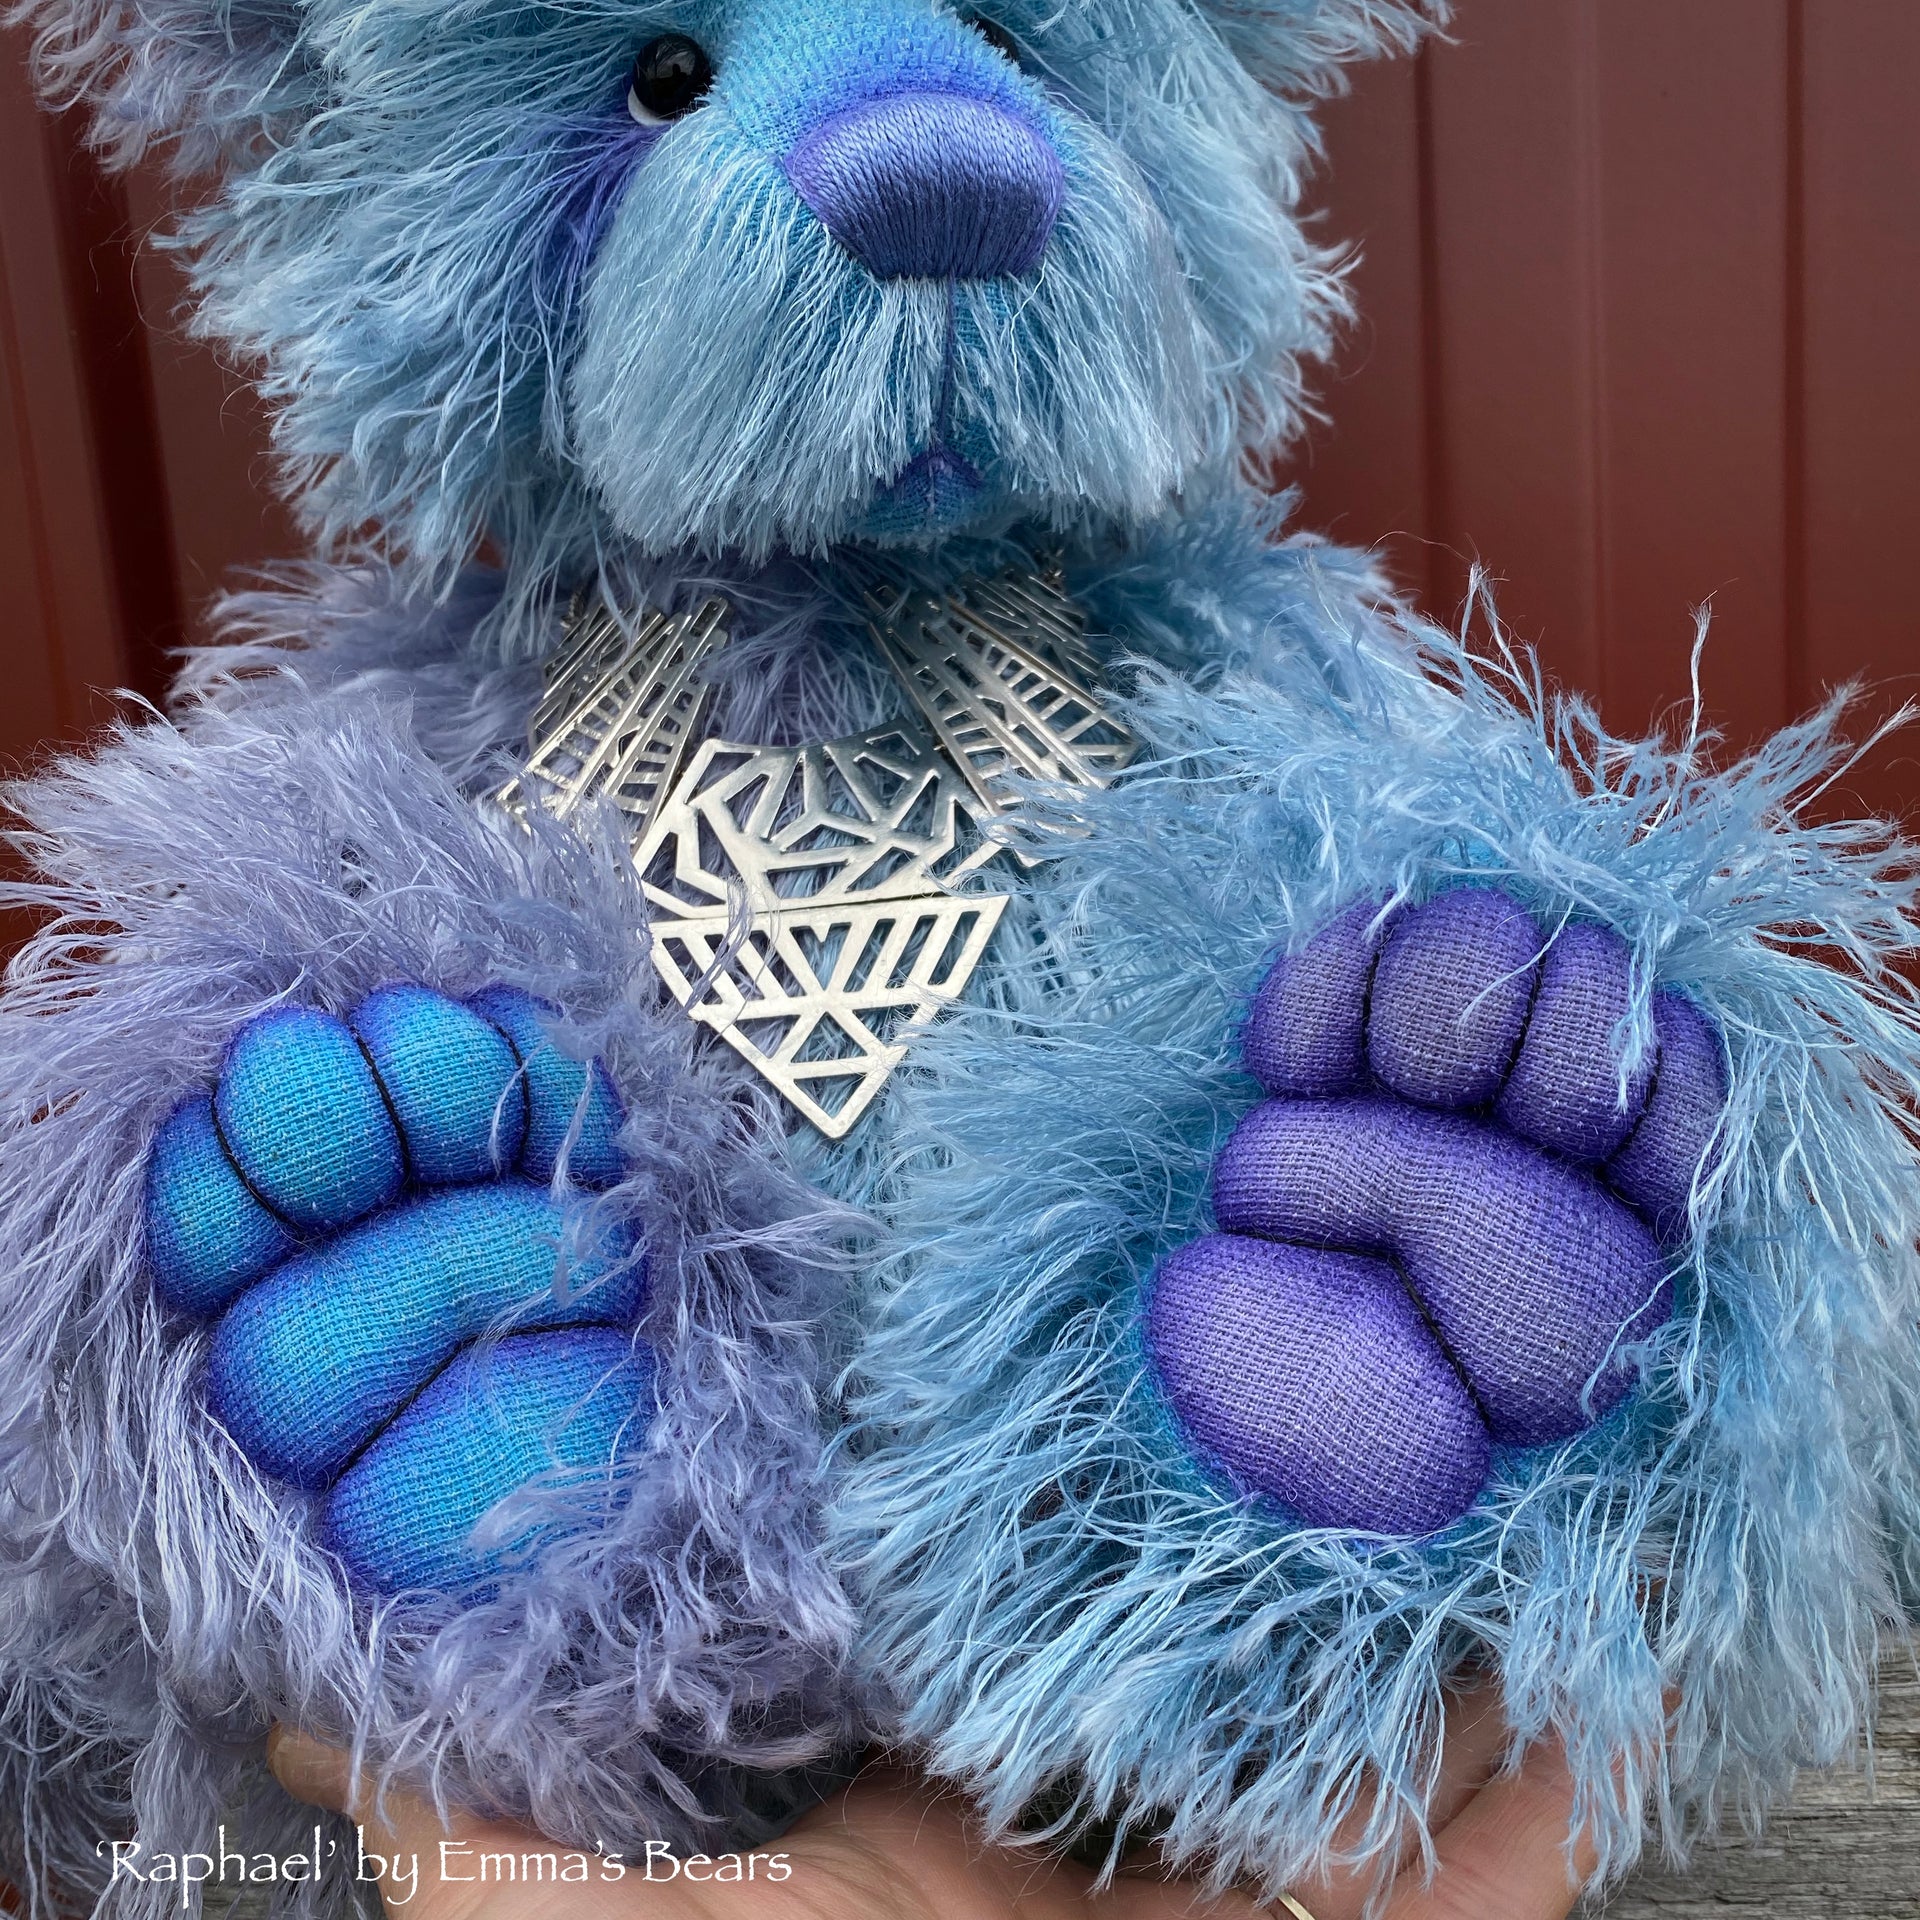 Raphael - 17IN hand dyed string mohair bear by Emmas Bears - OOAK